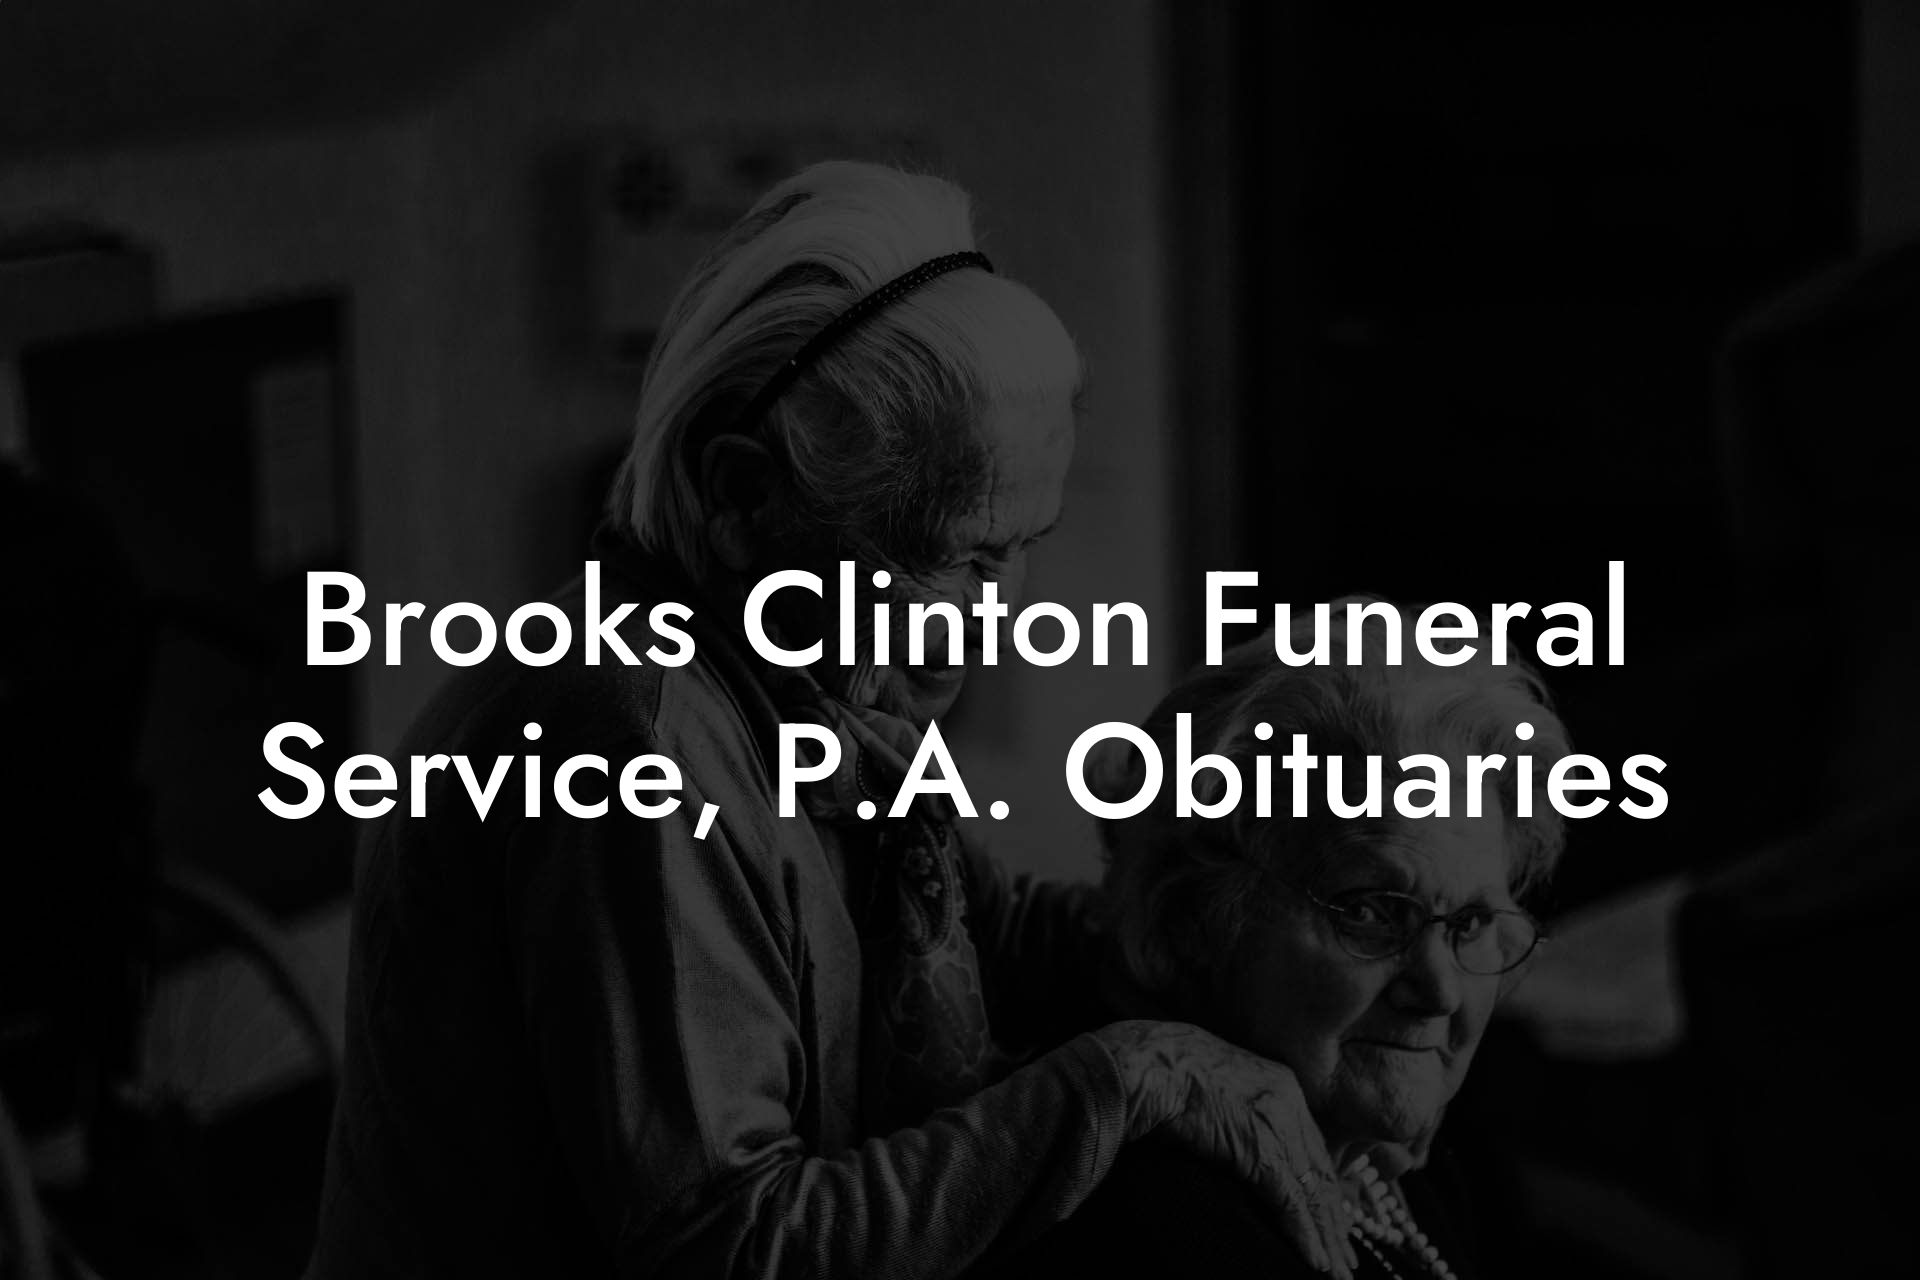 Brooks Clinton Funeral Service, P.A. Obituaries